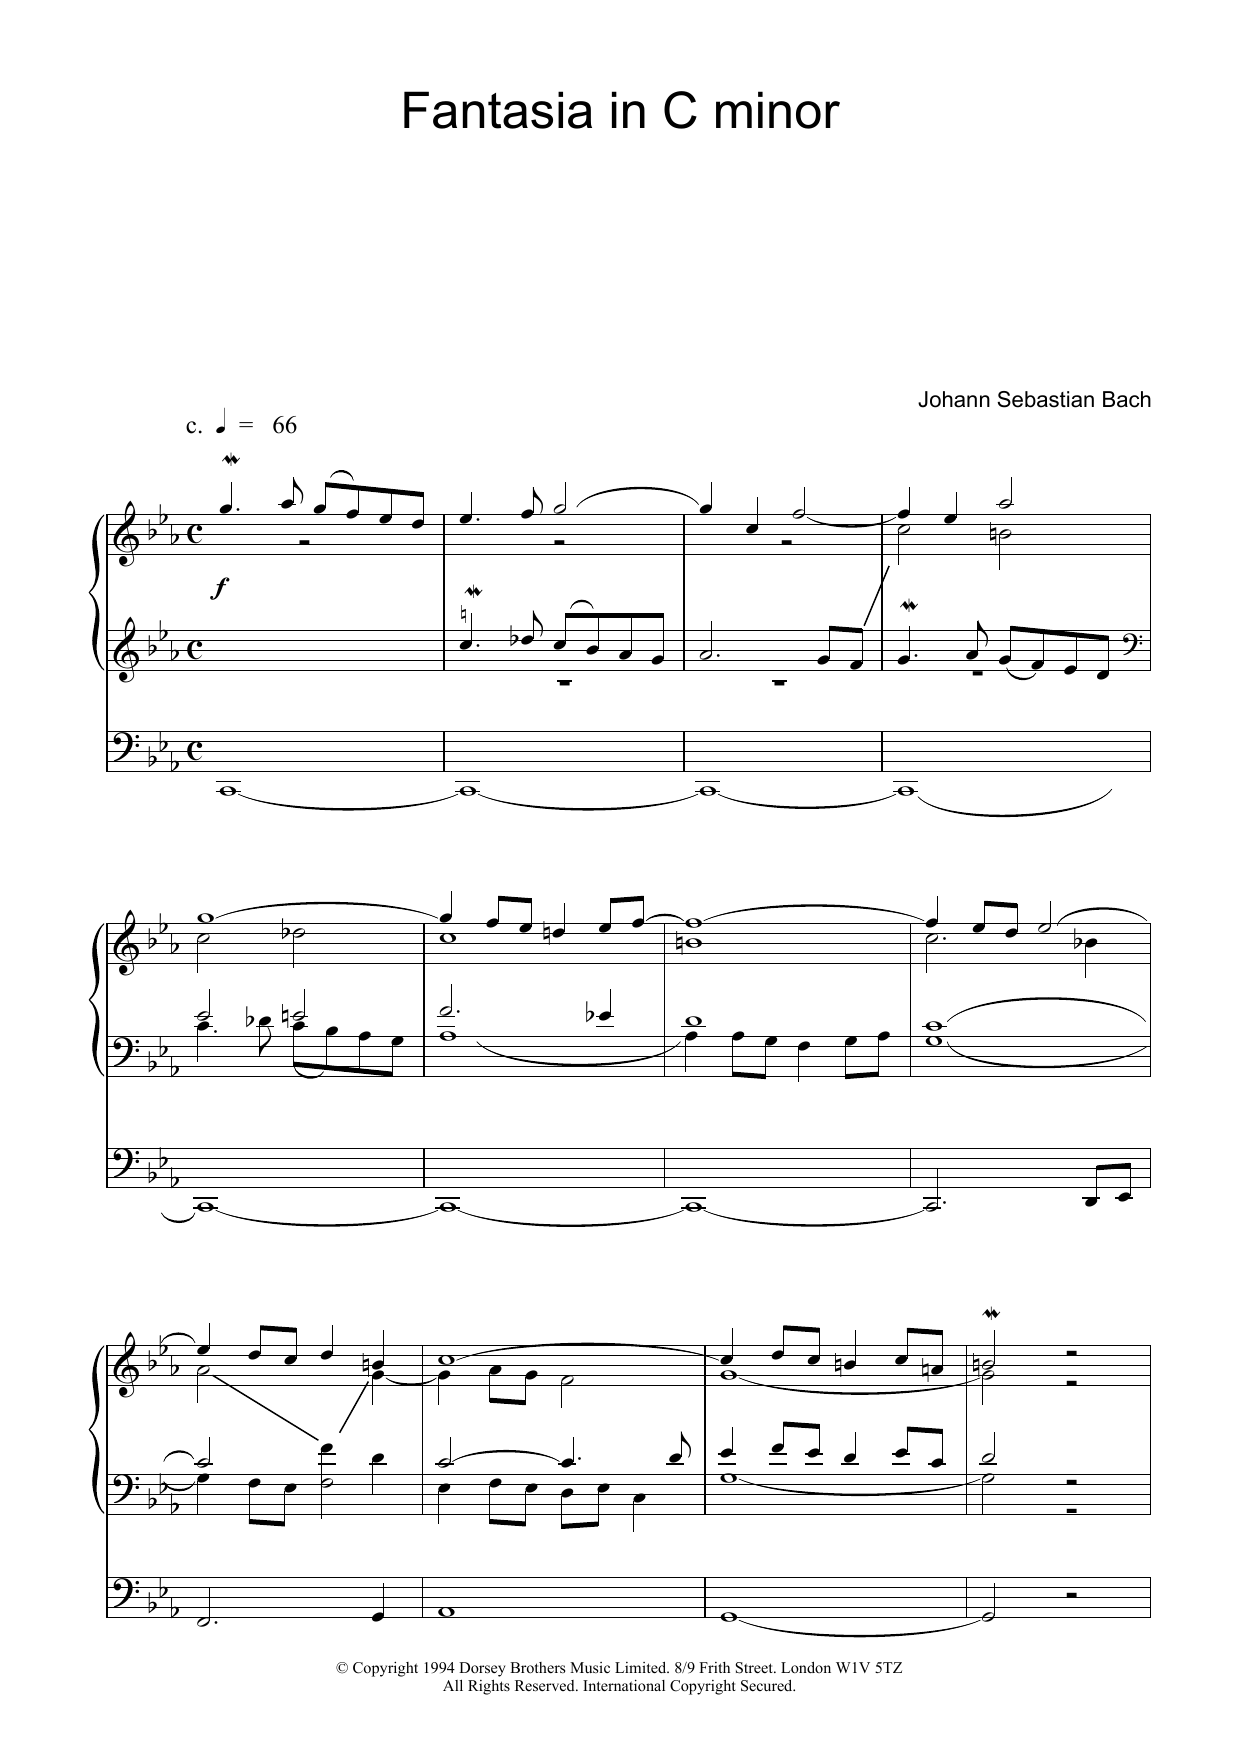 Johann Sebastian Bach Fantasia and Fugue in C Minor, BWV 537 sheet music notes and chords. Download Printable PDF.